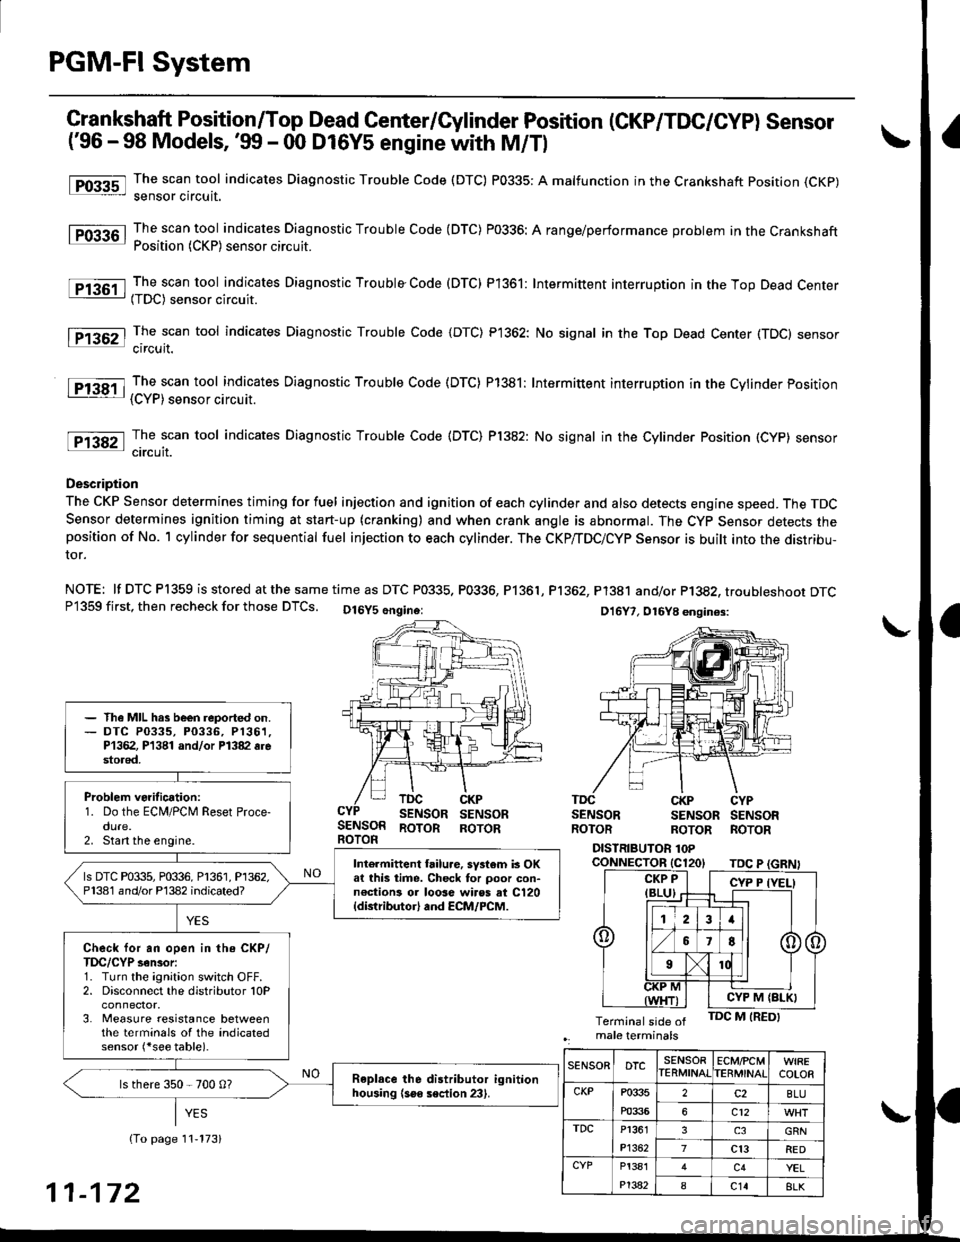 HONDA CIVIC 1996 6.G User Guide PGM-FI System
tFos3sl
tFffi6l
tPr361 I
fPfi62l
fFr38il
tF13s2-l
Crankshaft Position/Top Dead Genter/Gylinder Position (CKP/TDC/CYP) Sensor
(96 - 98 Models, !n - 00 D16Y5 engine with M/Tl
The scan to